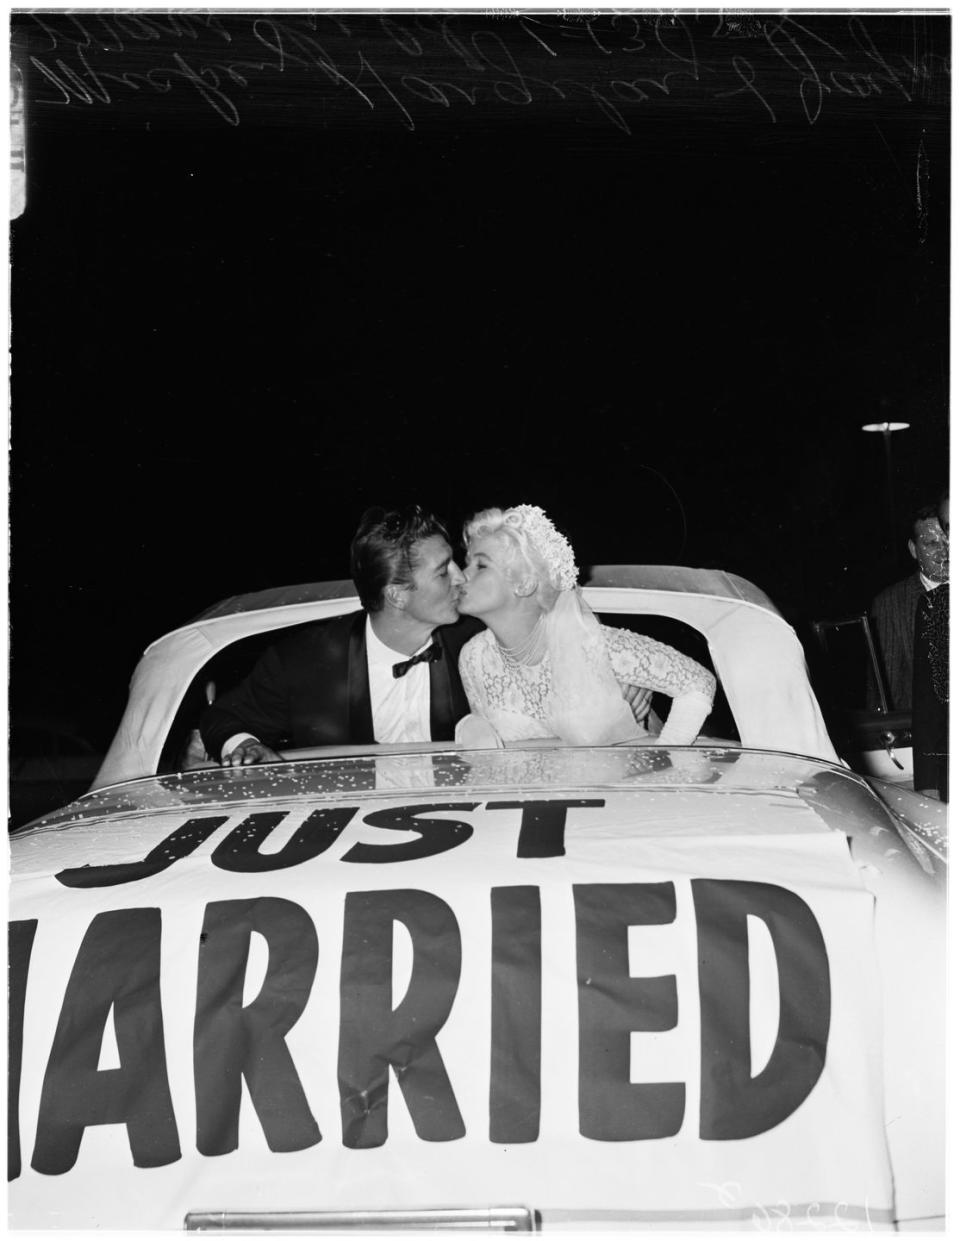 1958: Getting Married Again